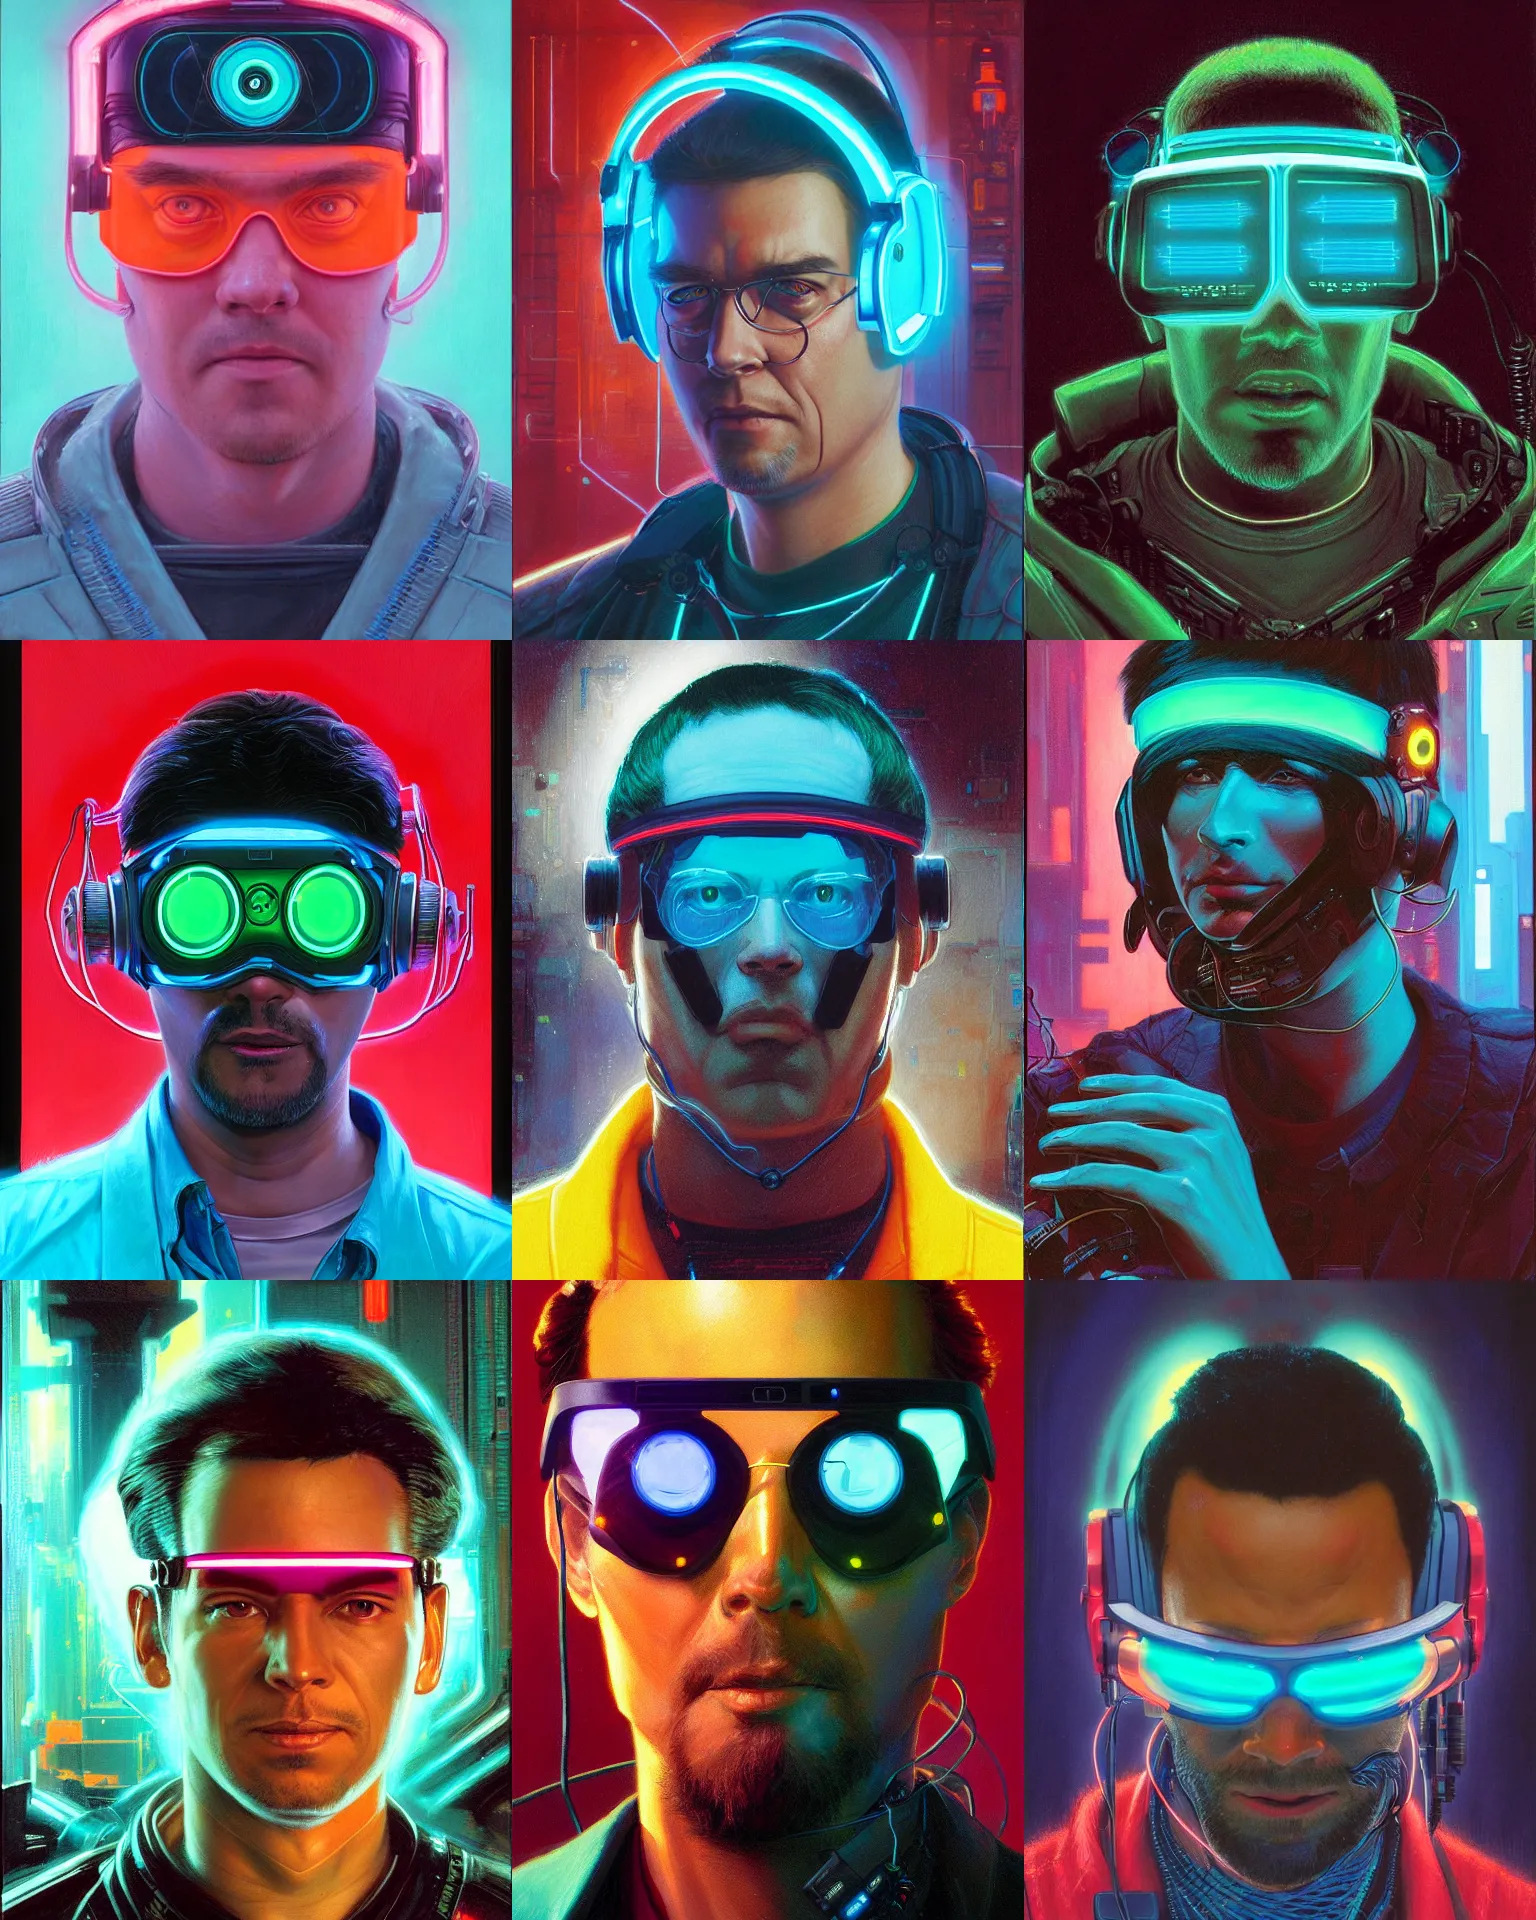 Prompt: digital neon cyberpunk programmer with geordi eye visor and headset headshot portrait painting by donato giancola, kilian eng, john berkley, hayao miyazaki, j. c. leyendecker, mead schaeffer neon teal